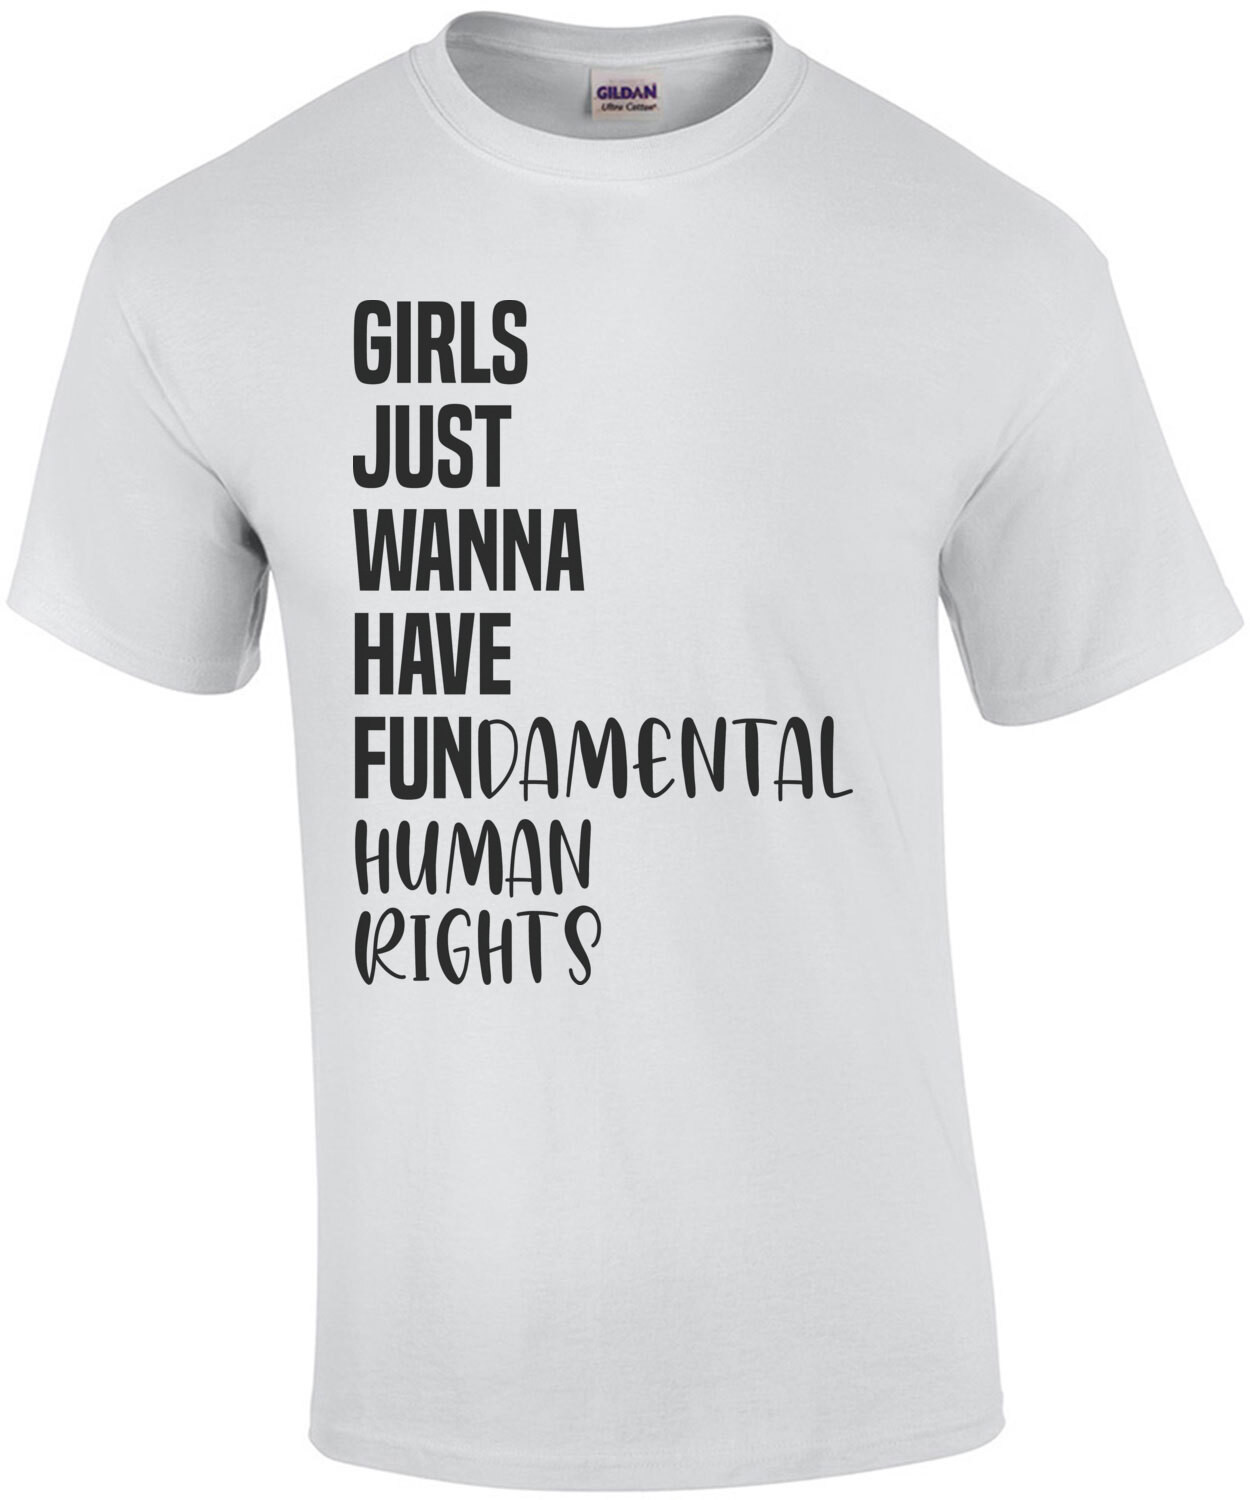 Girls just wanna have FUNdamental human rights - ladies t-shirt